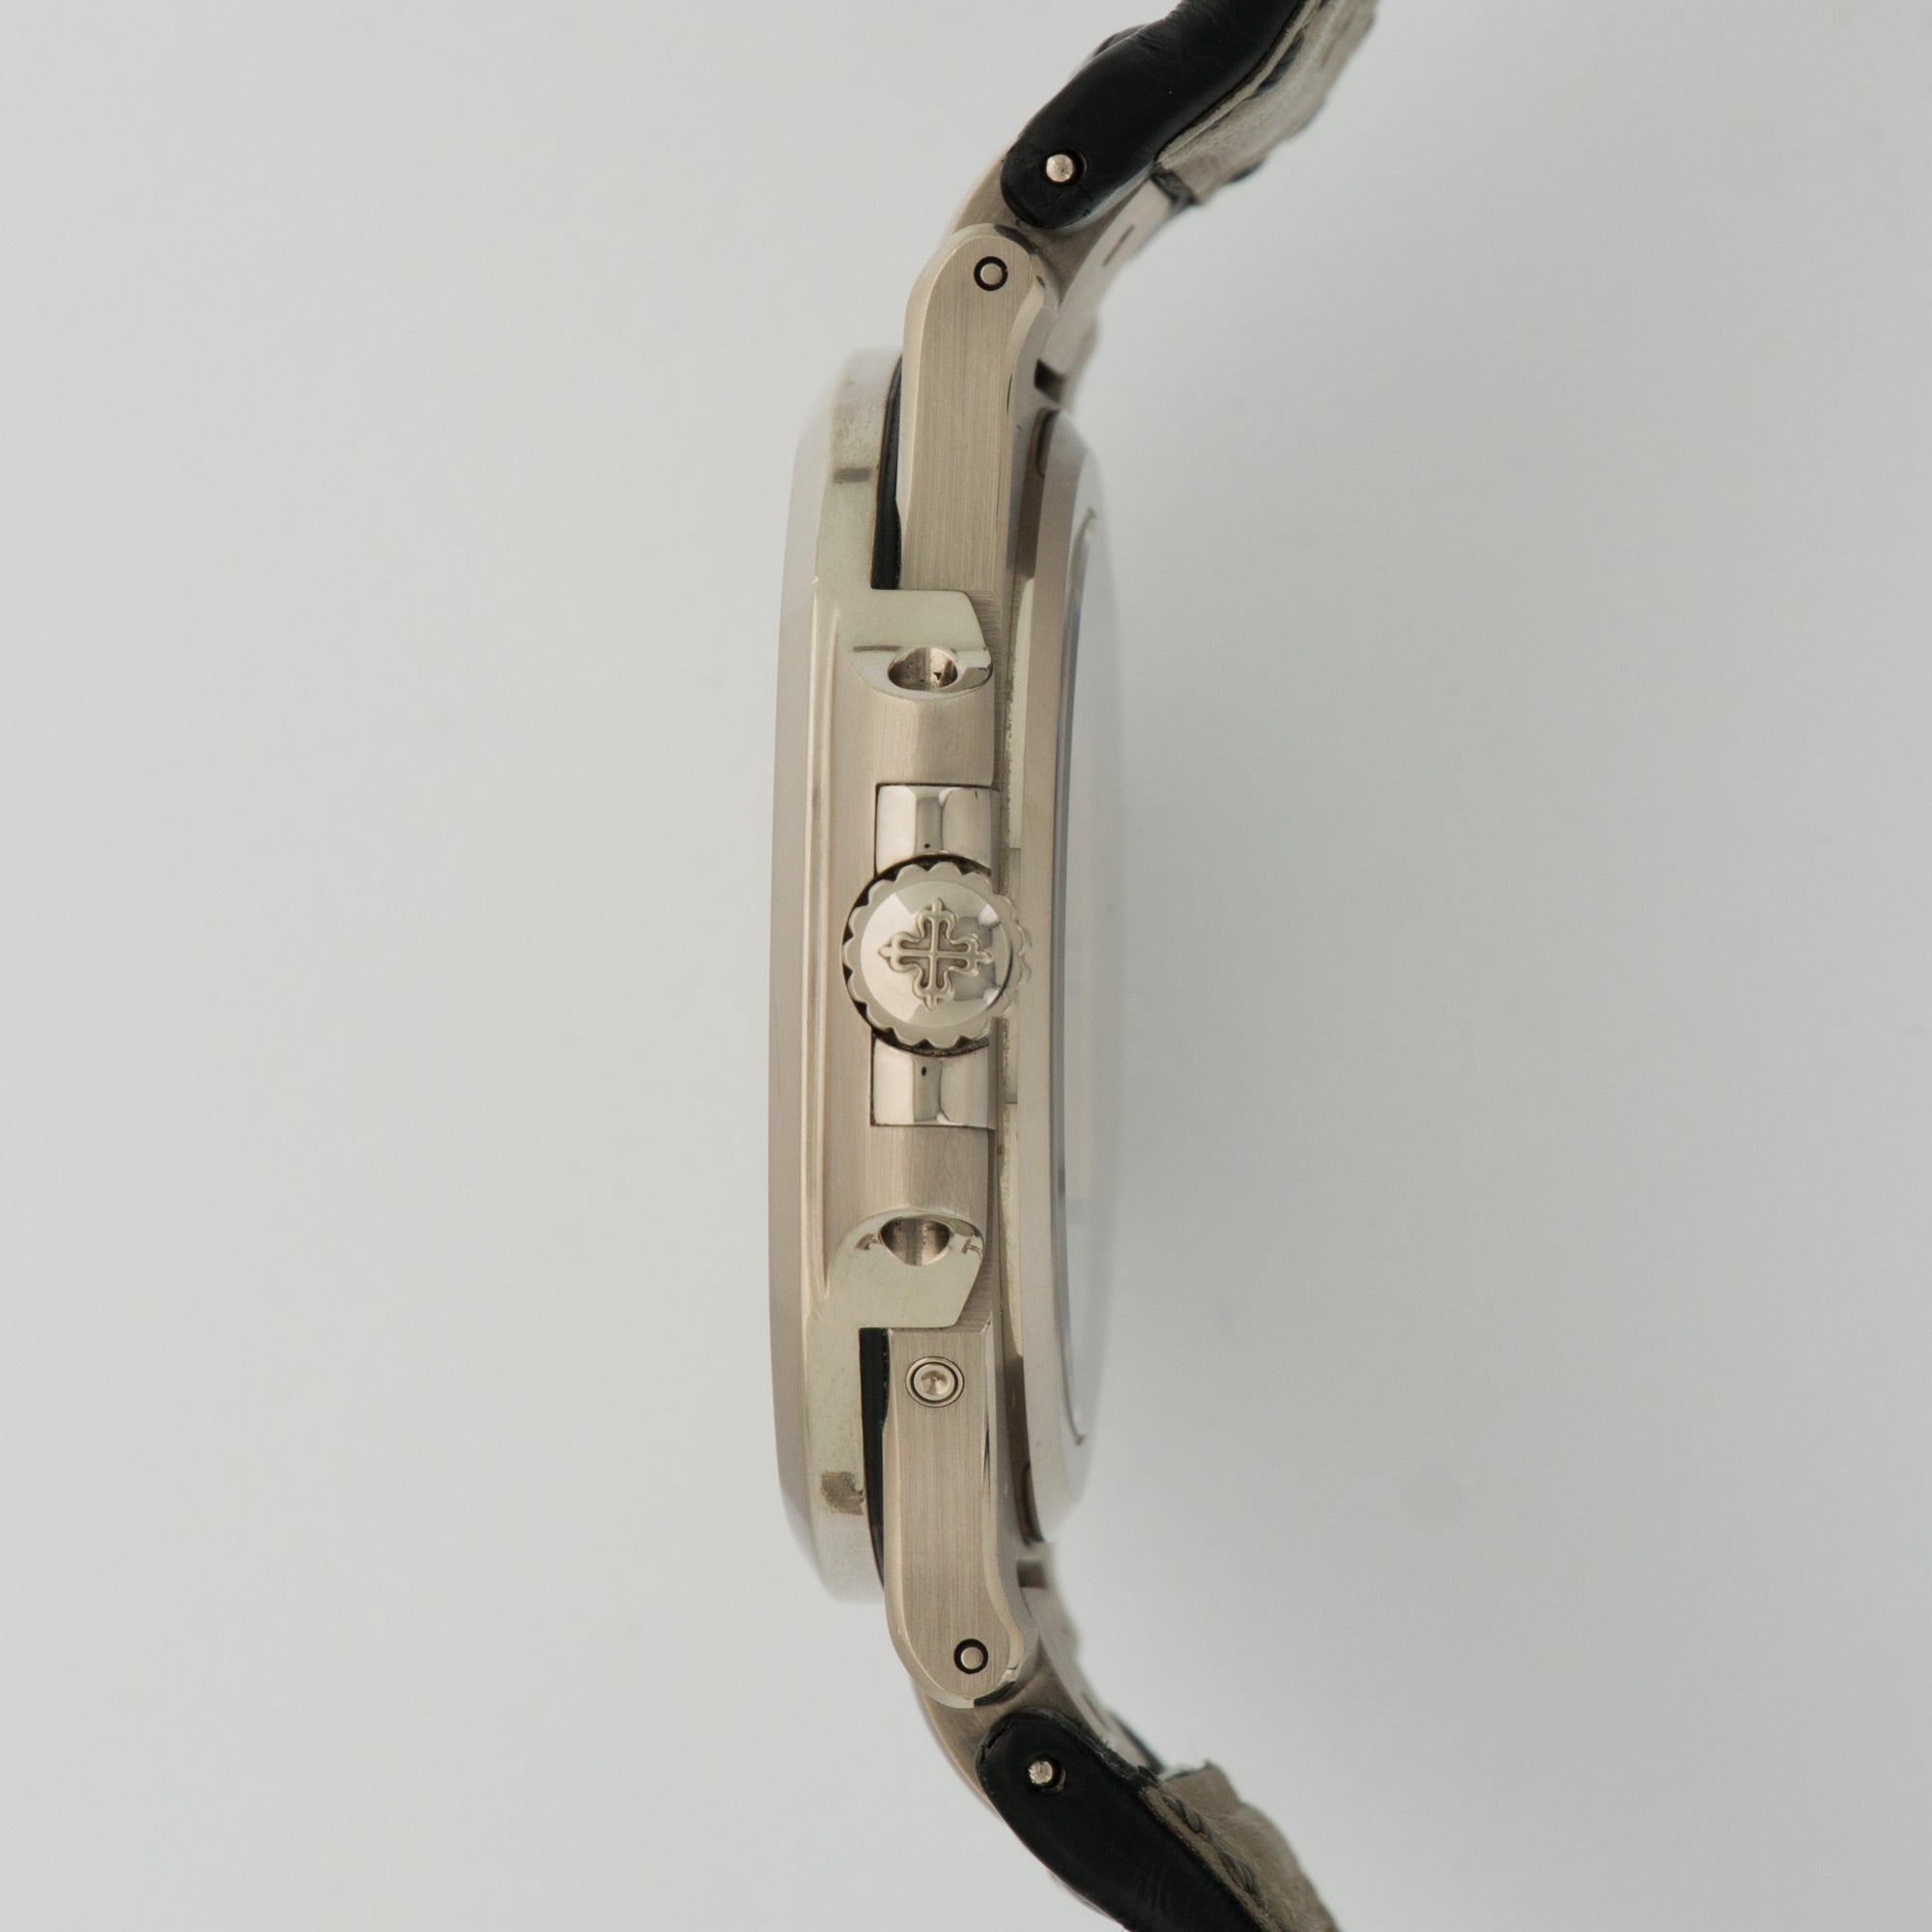 Patek Philippe - Patek Philippe White Gold Nautilus Moonphase Watch Ref. 5712 - The Keystone Watches